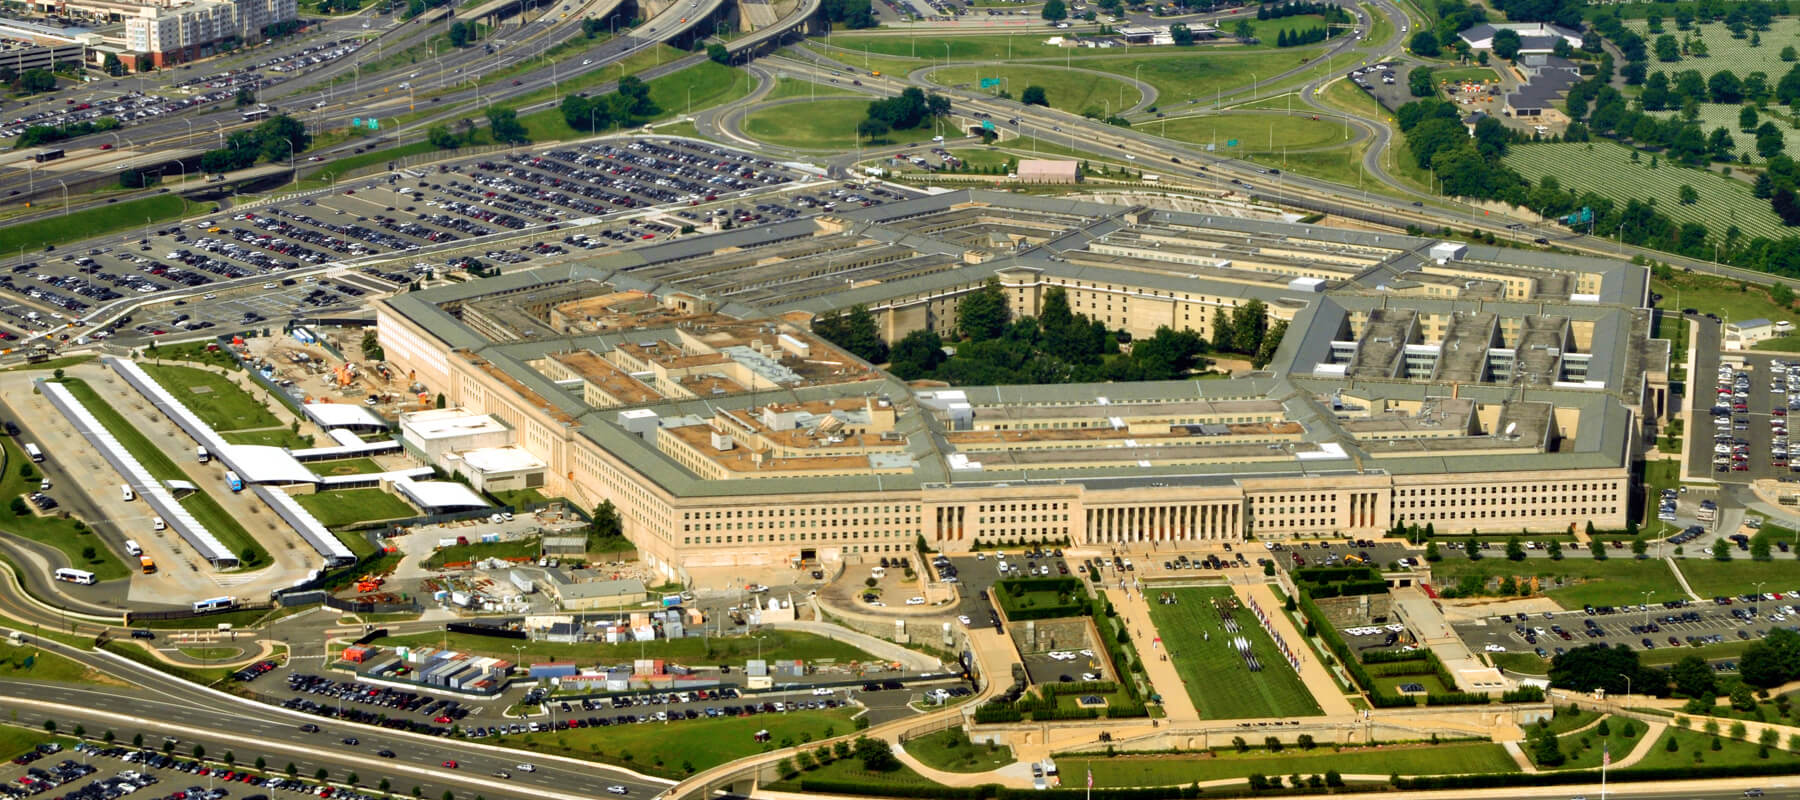 tours at the pentagon